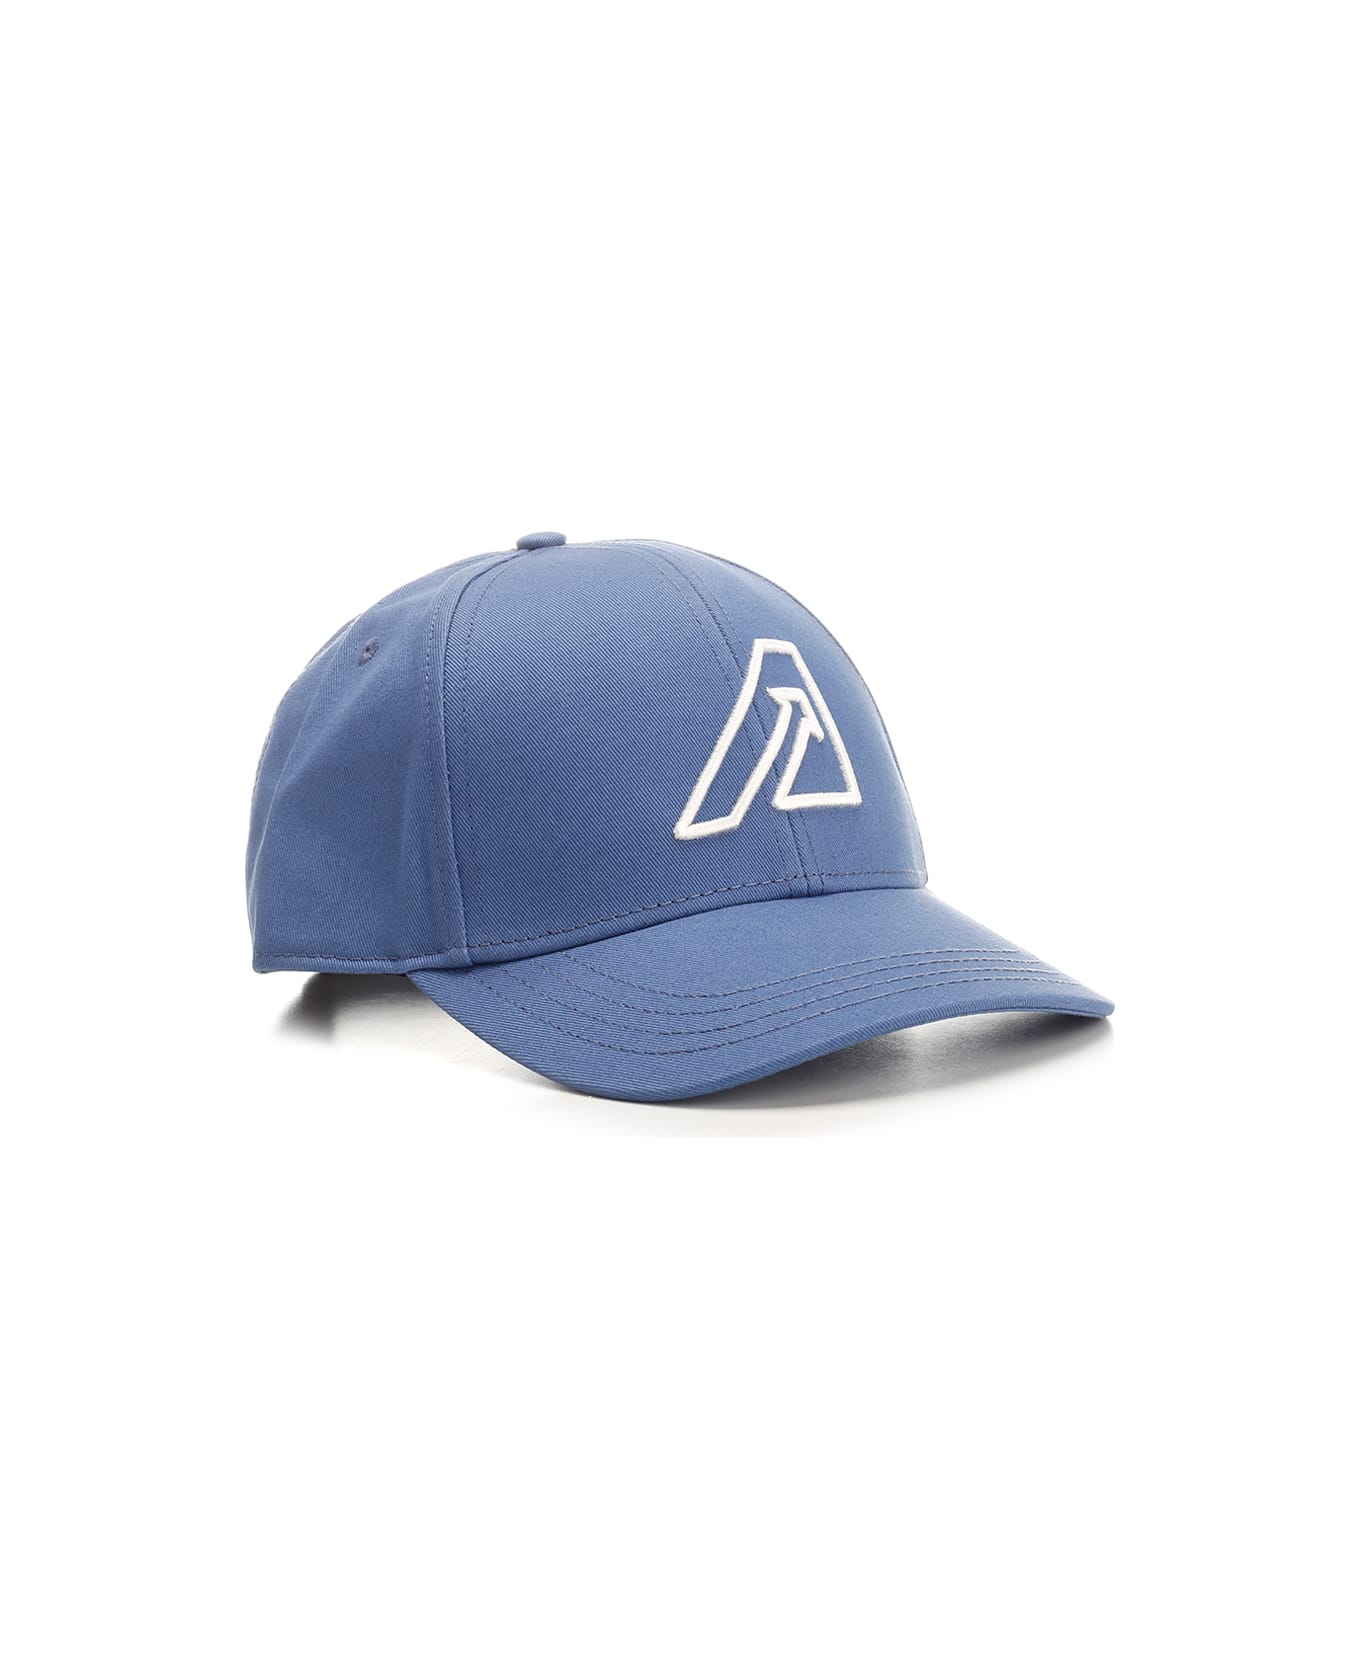 Autry Light Blue Cap With Logo - Light blue 帽子